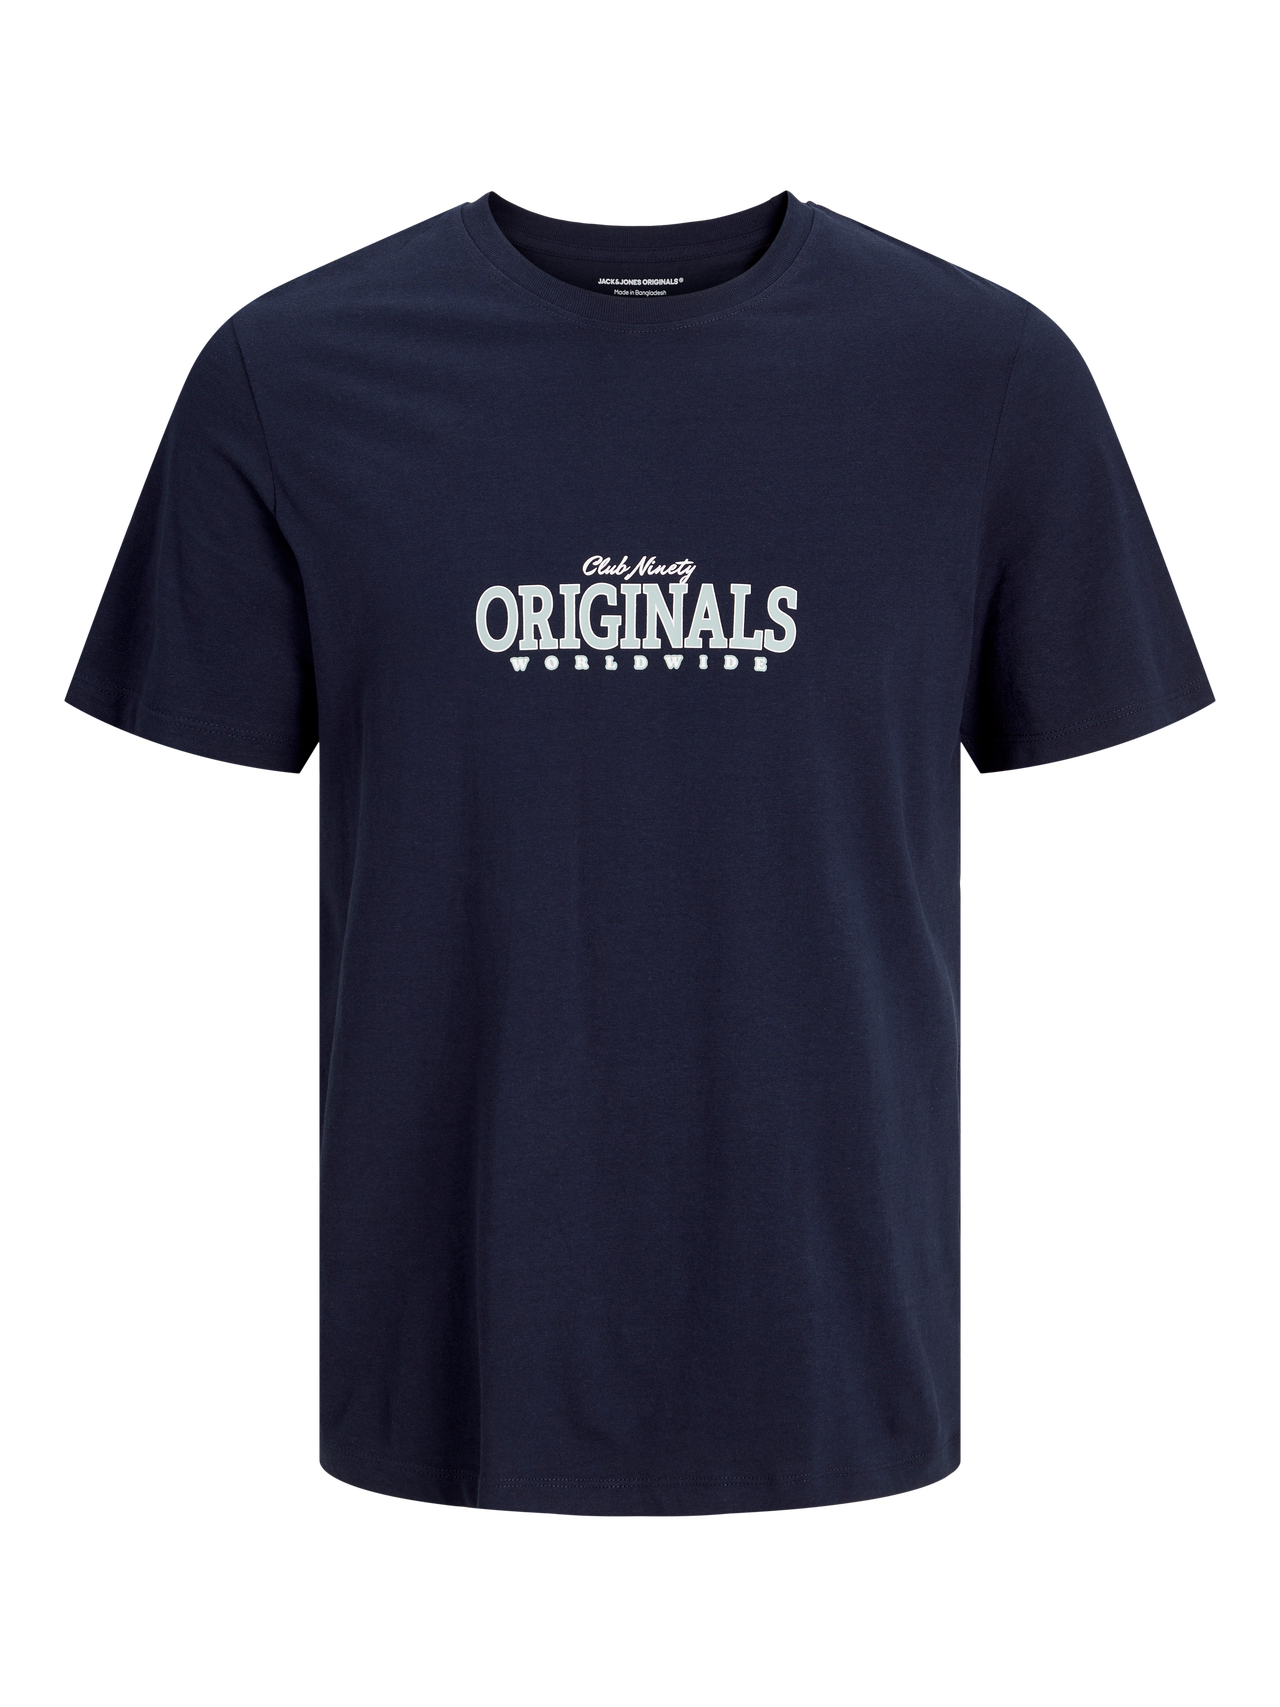 Jack & Jones T-shirt Estampar Decote Redondo -Navy Blazer - 12255079